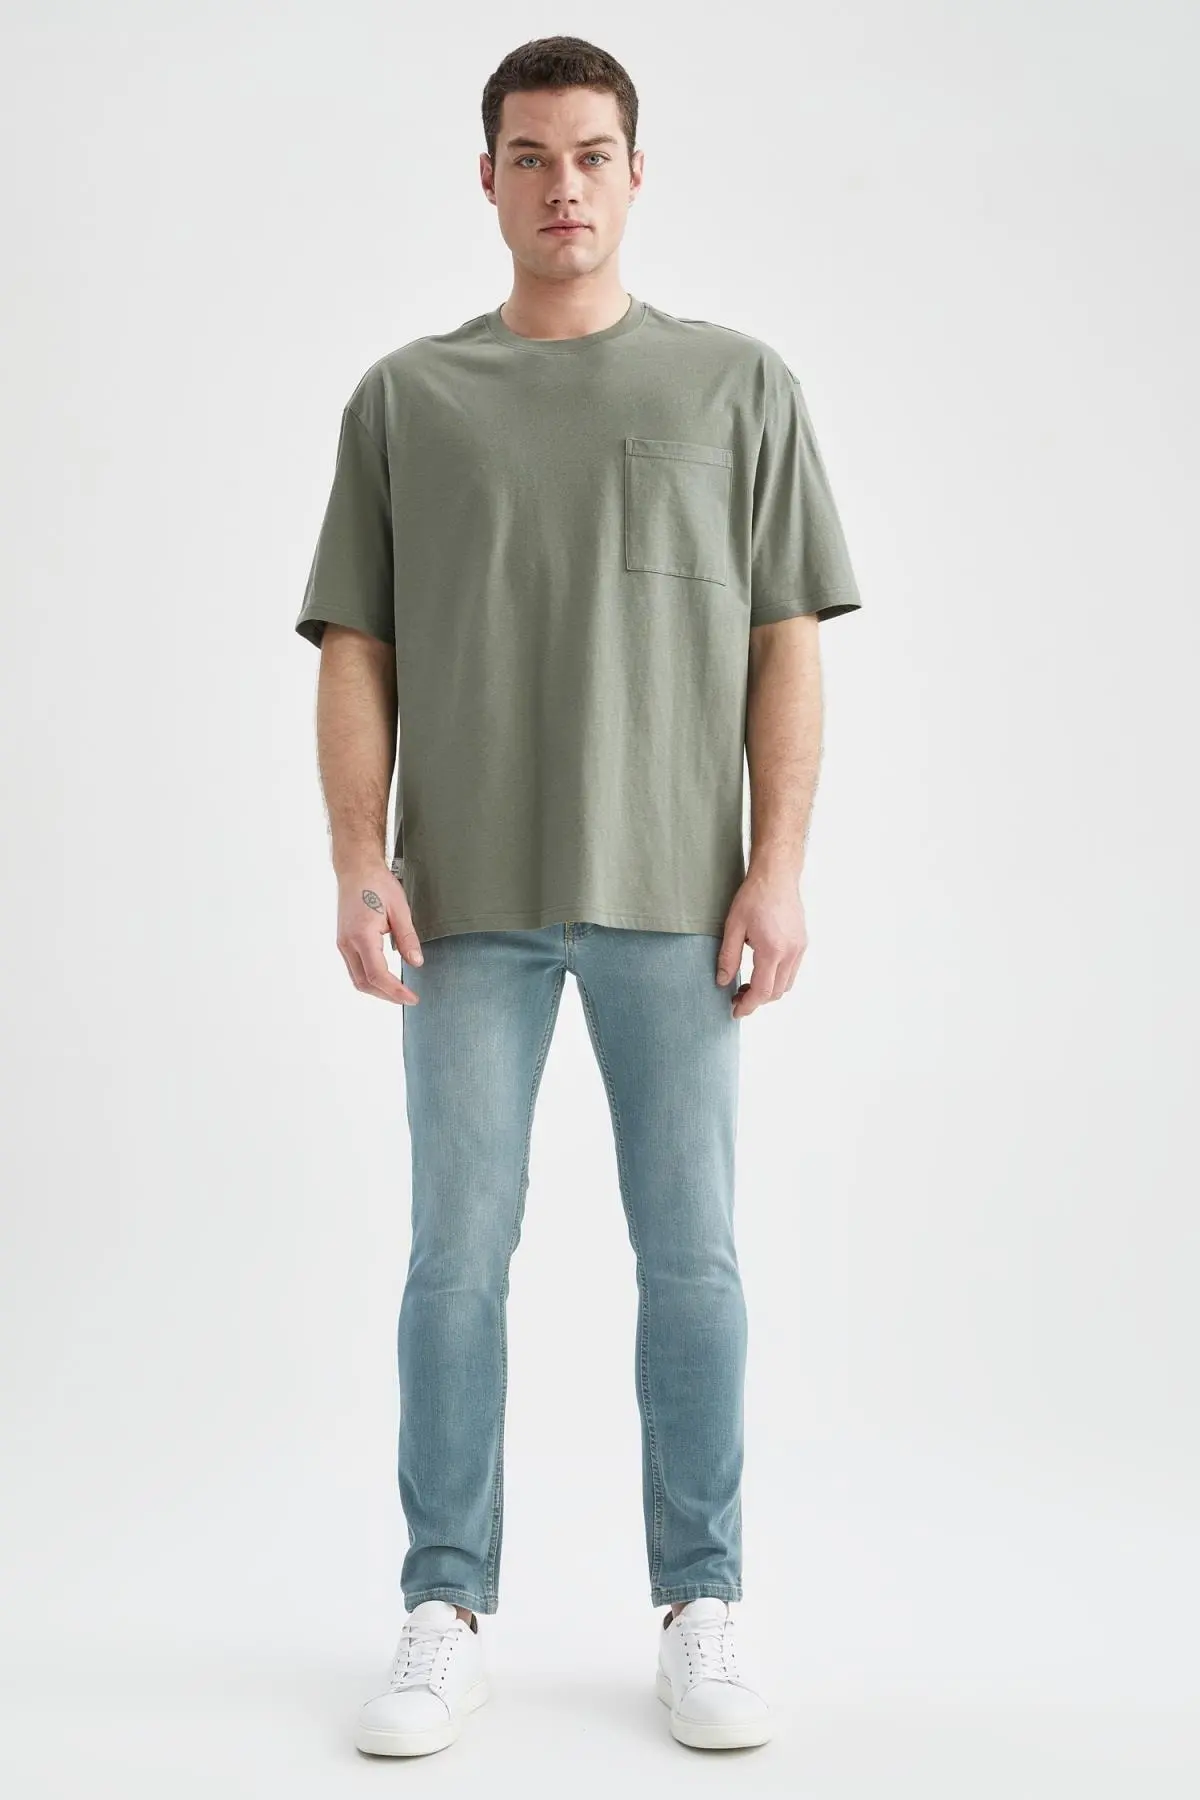 تیشرت اور سایز تک جیب مردانه زیتونی برند Defacto 